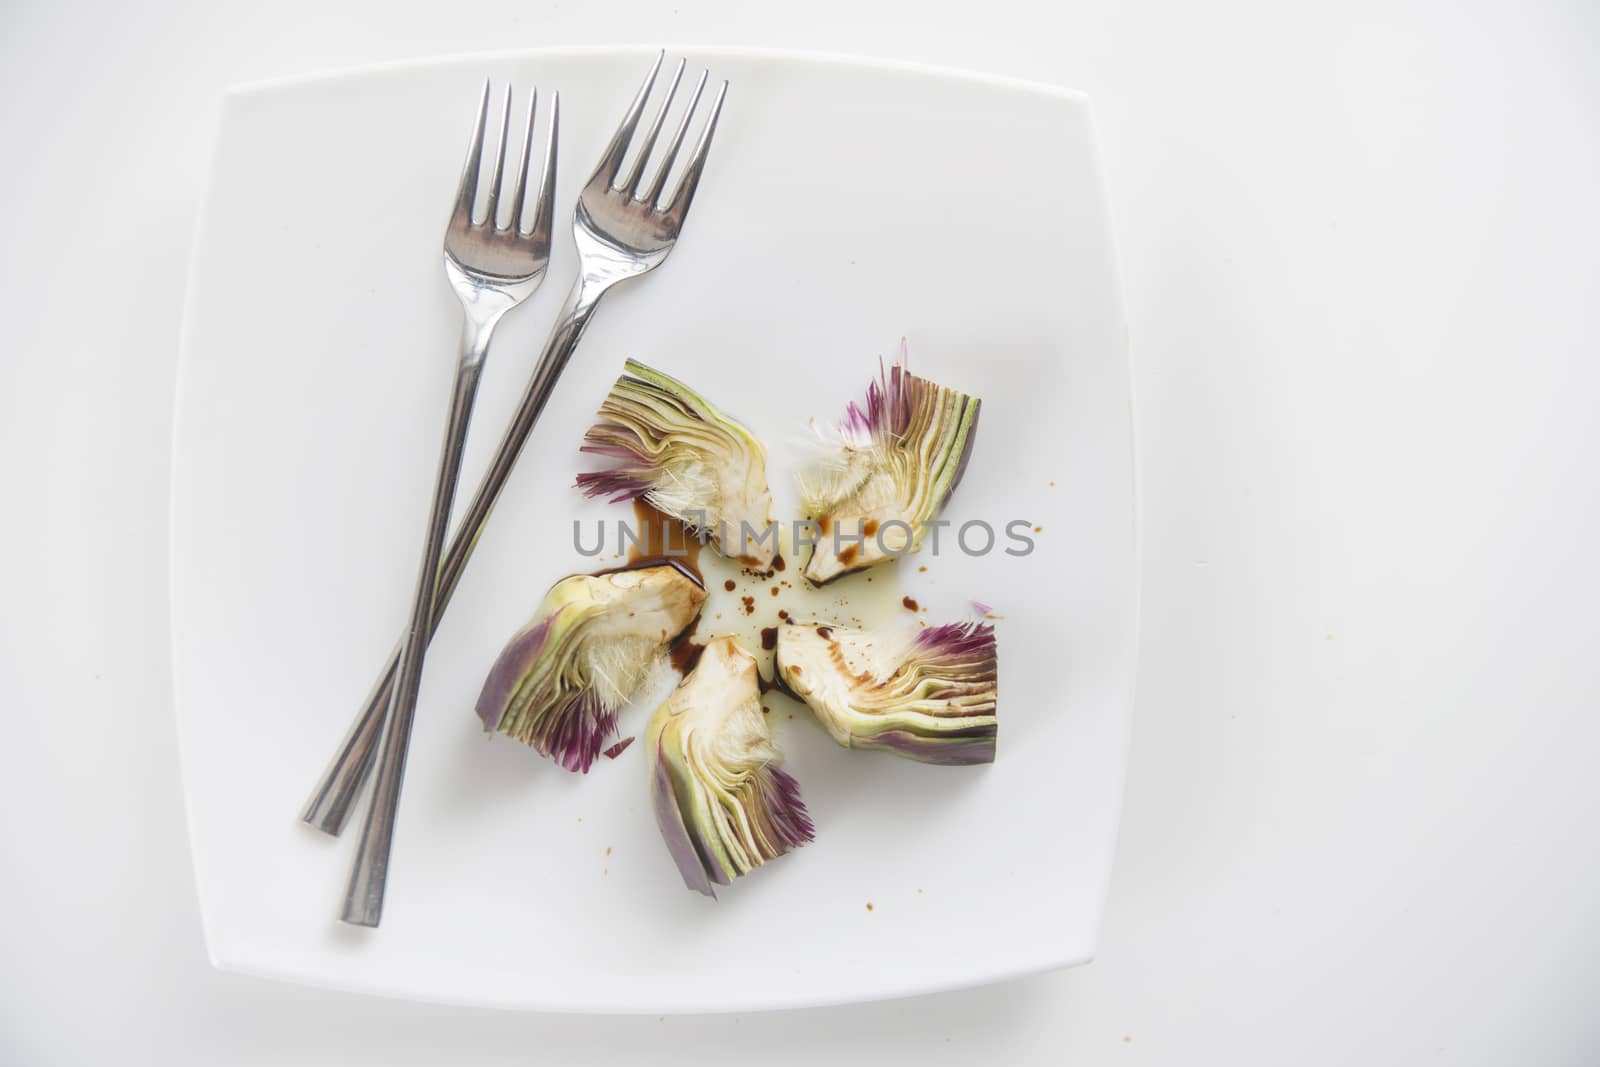 Presentation of a side dish made of fresh artichokes
